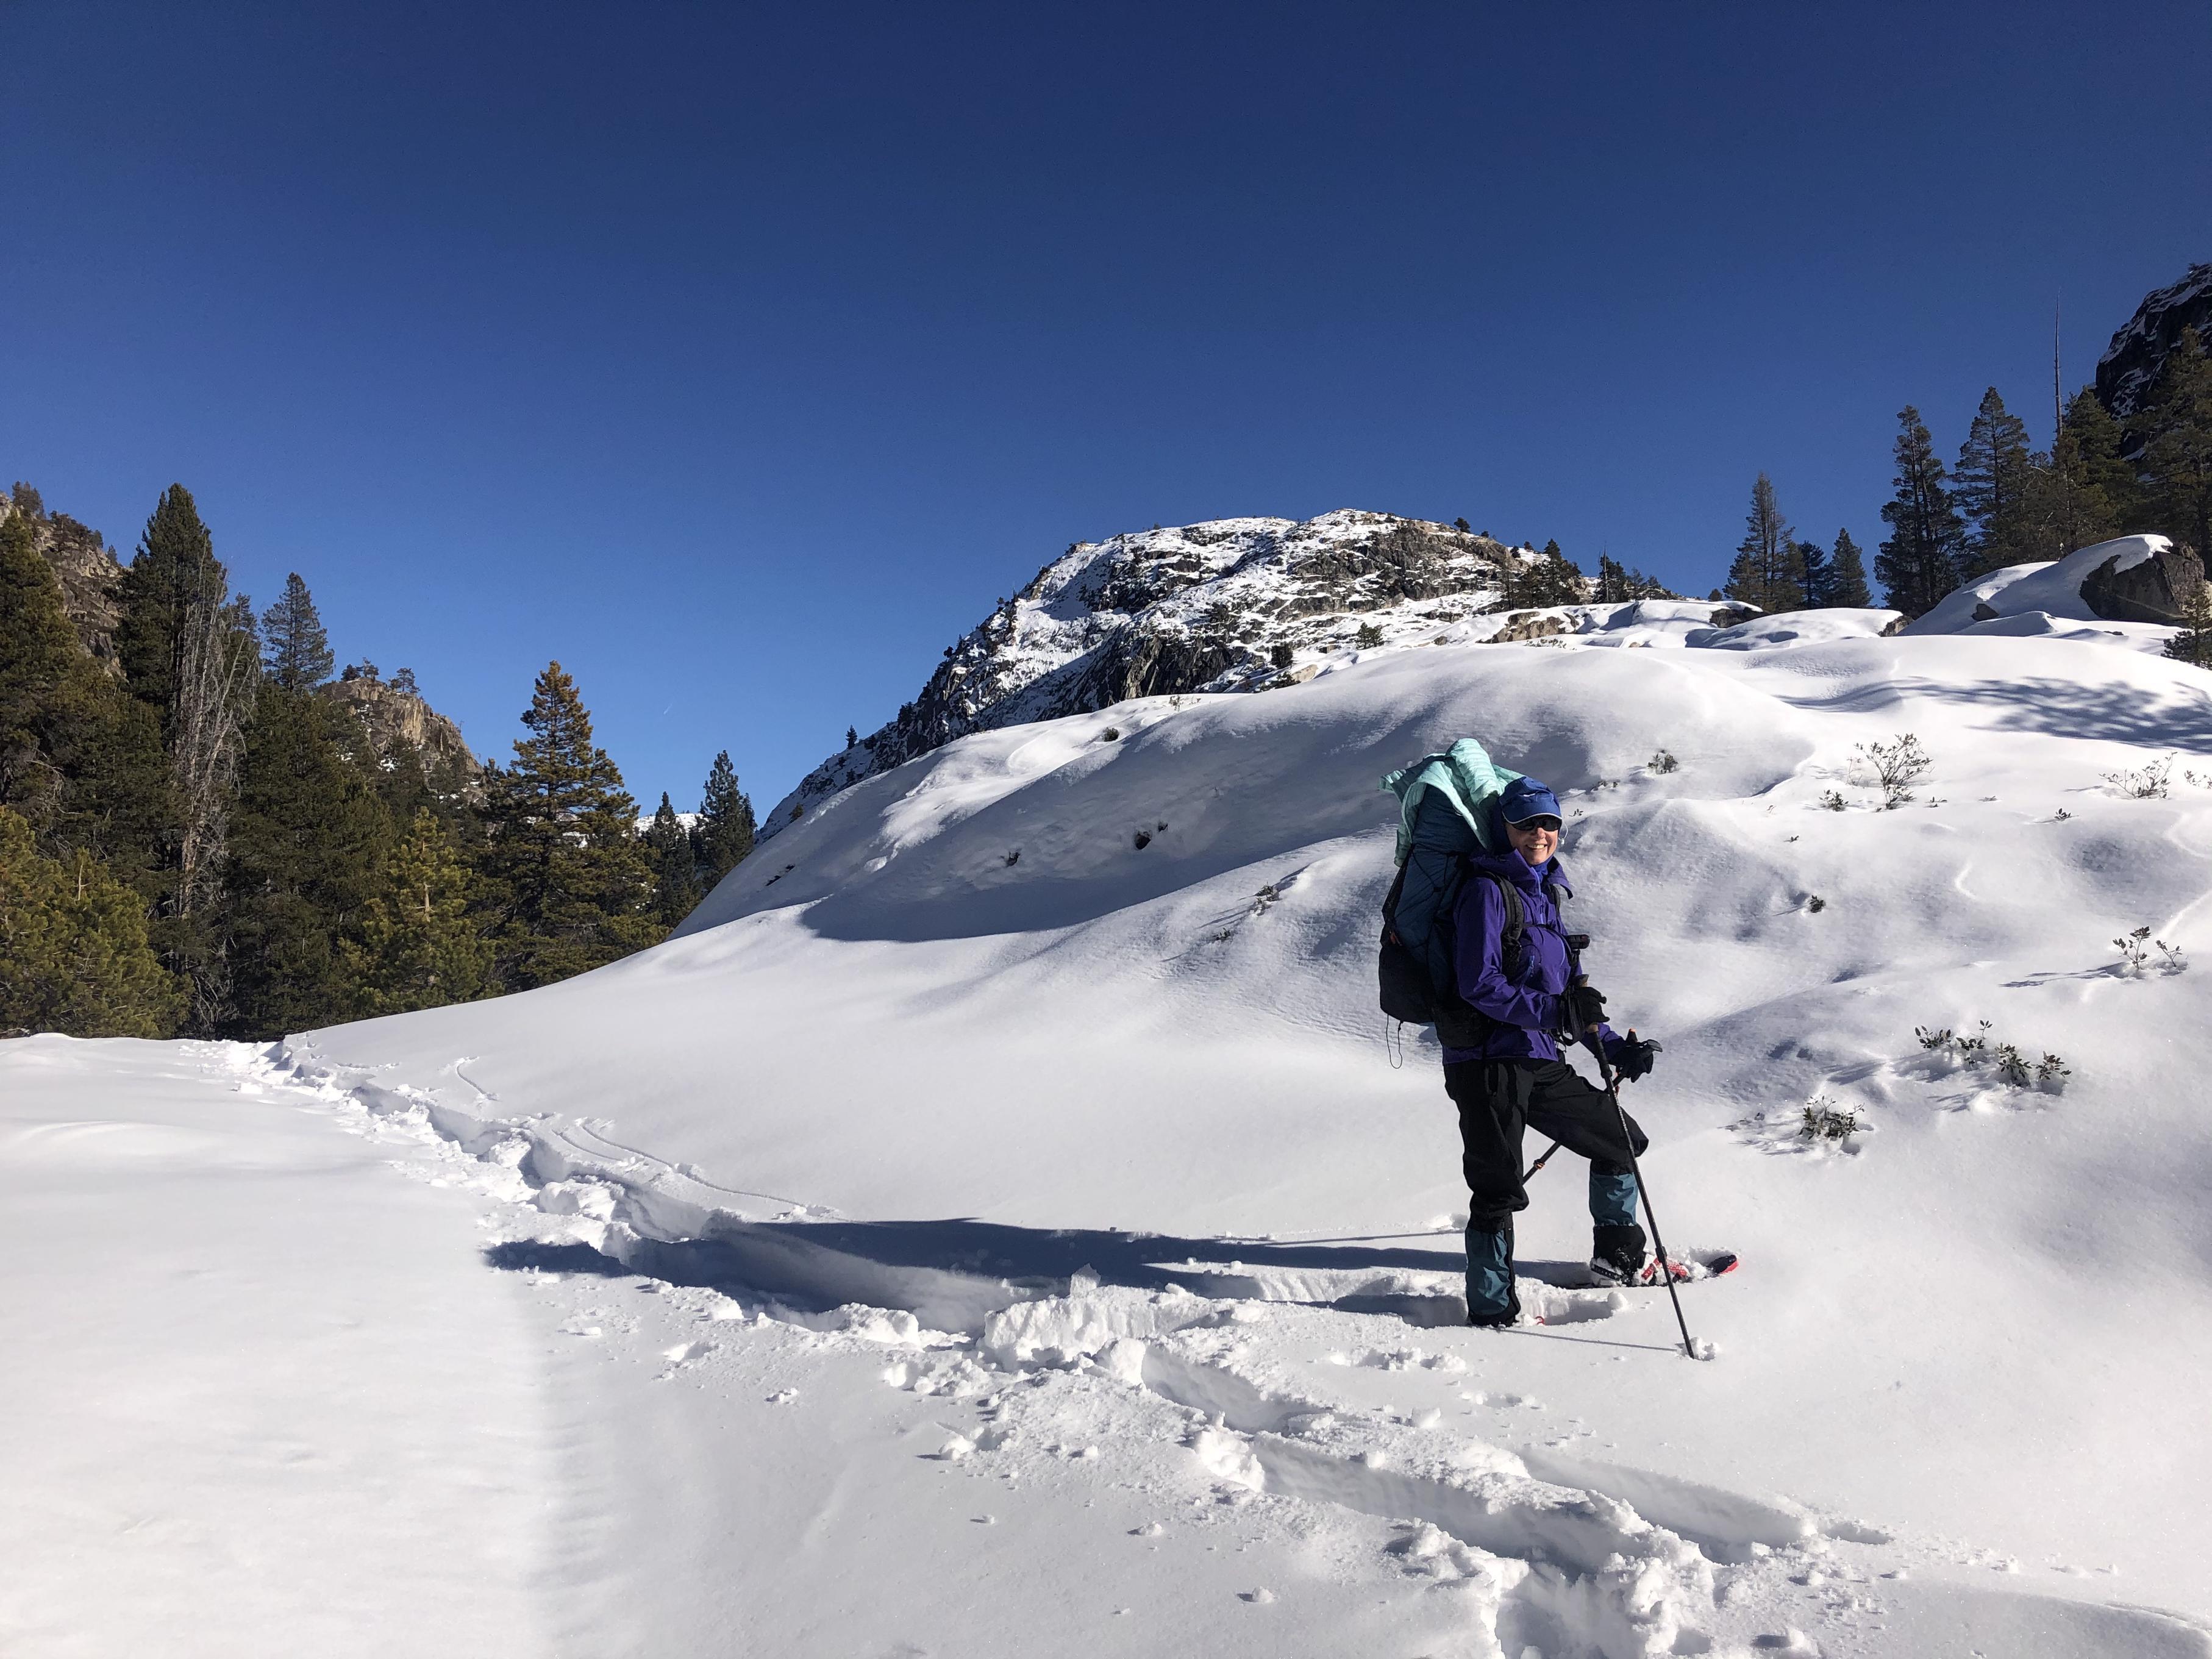 Gela hiking through the snow